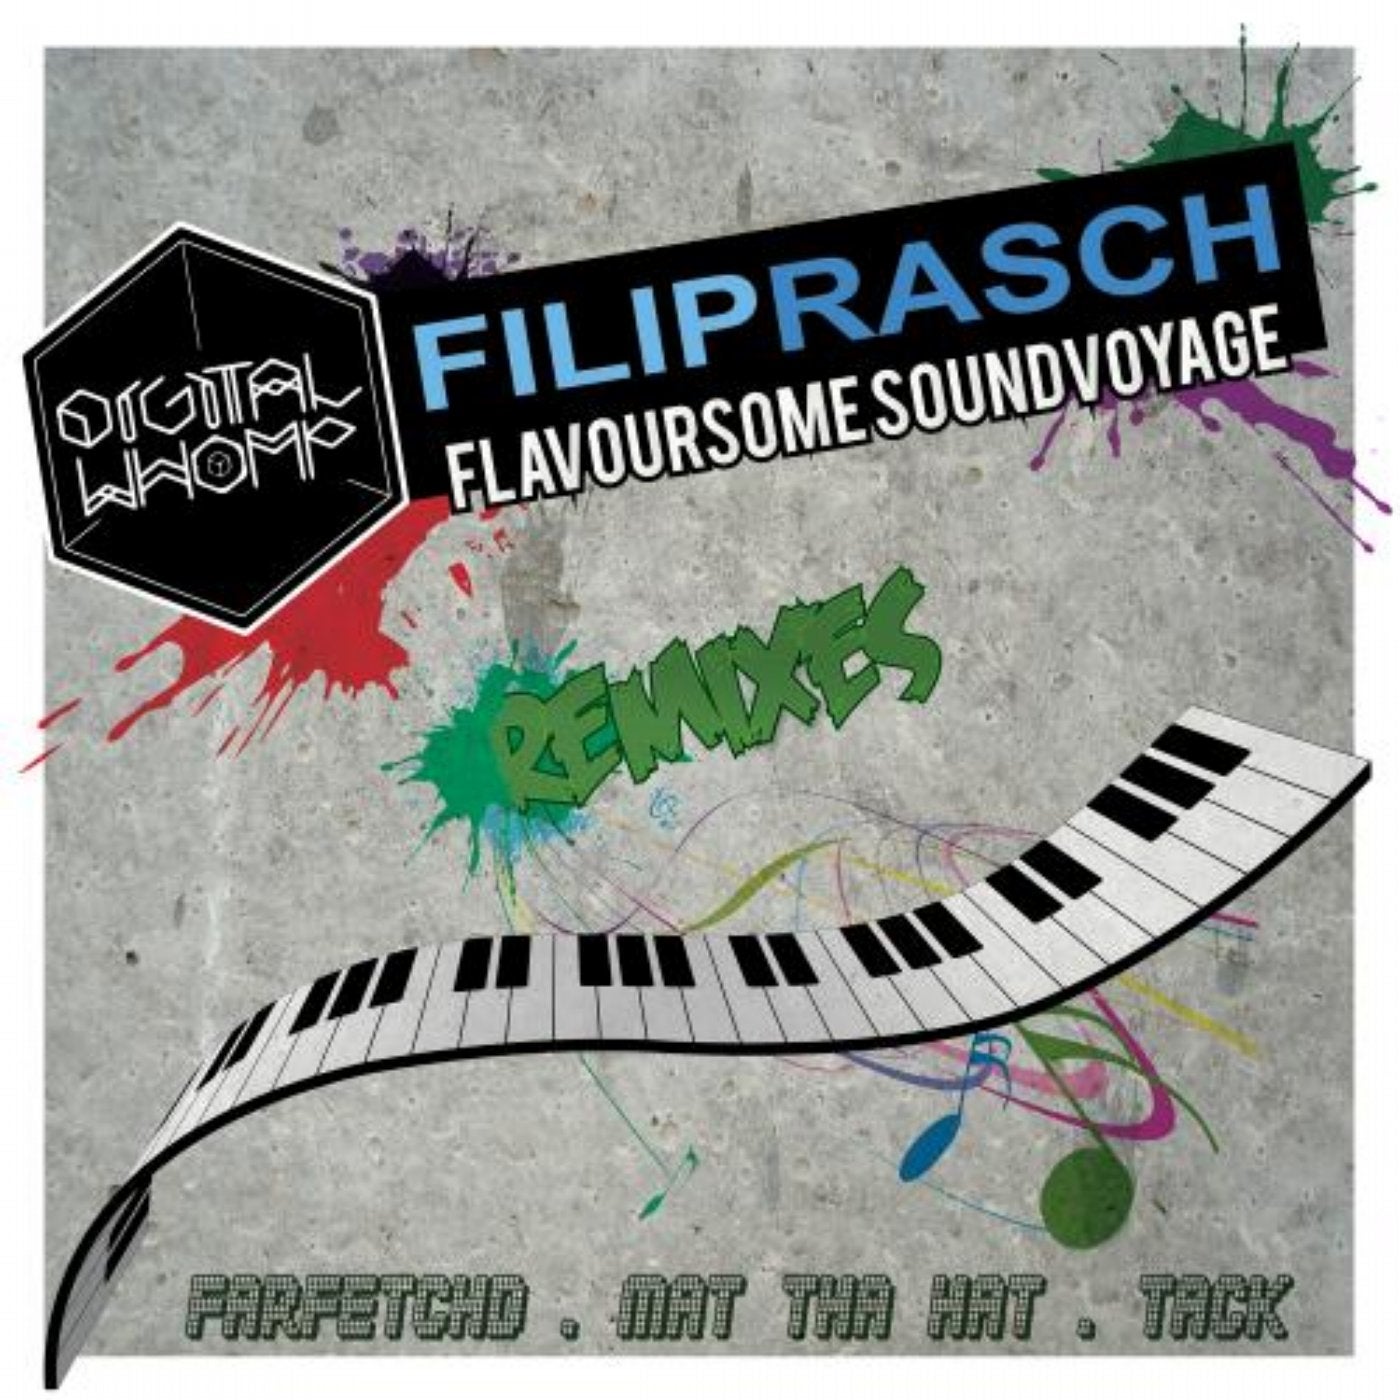 Flavoursome Sound Voyage - Remixes